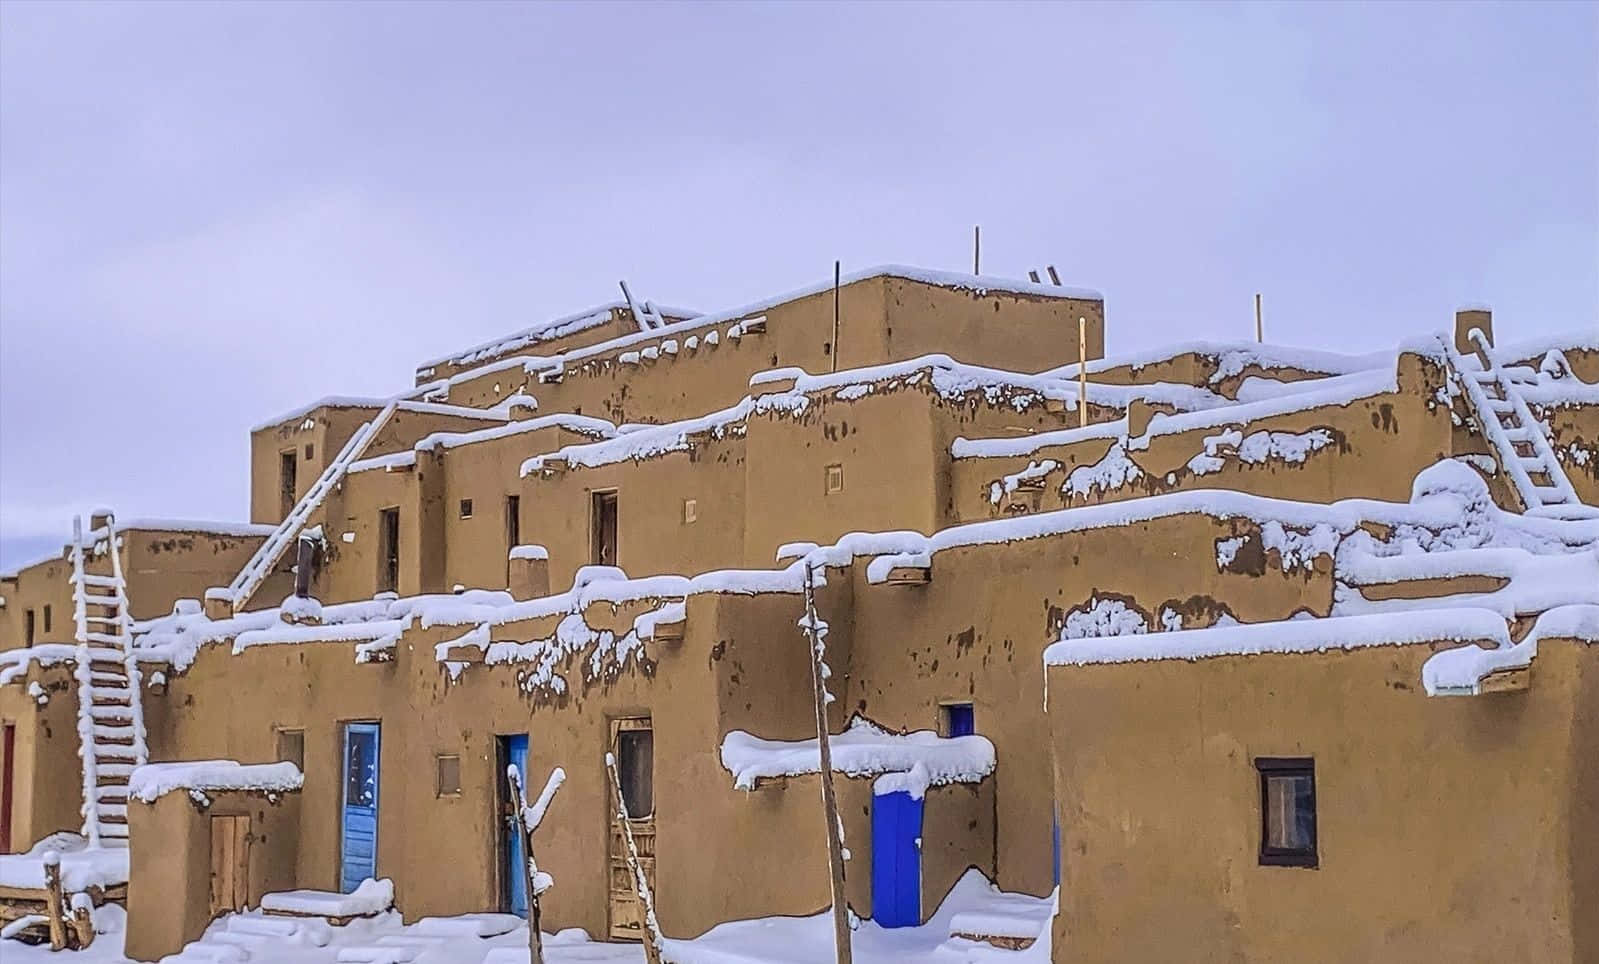 Taos Pueblo Covered In Snow Wallpaper